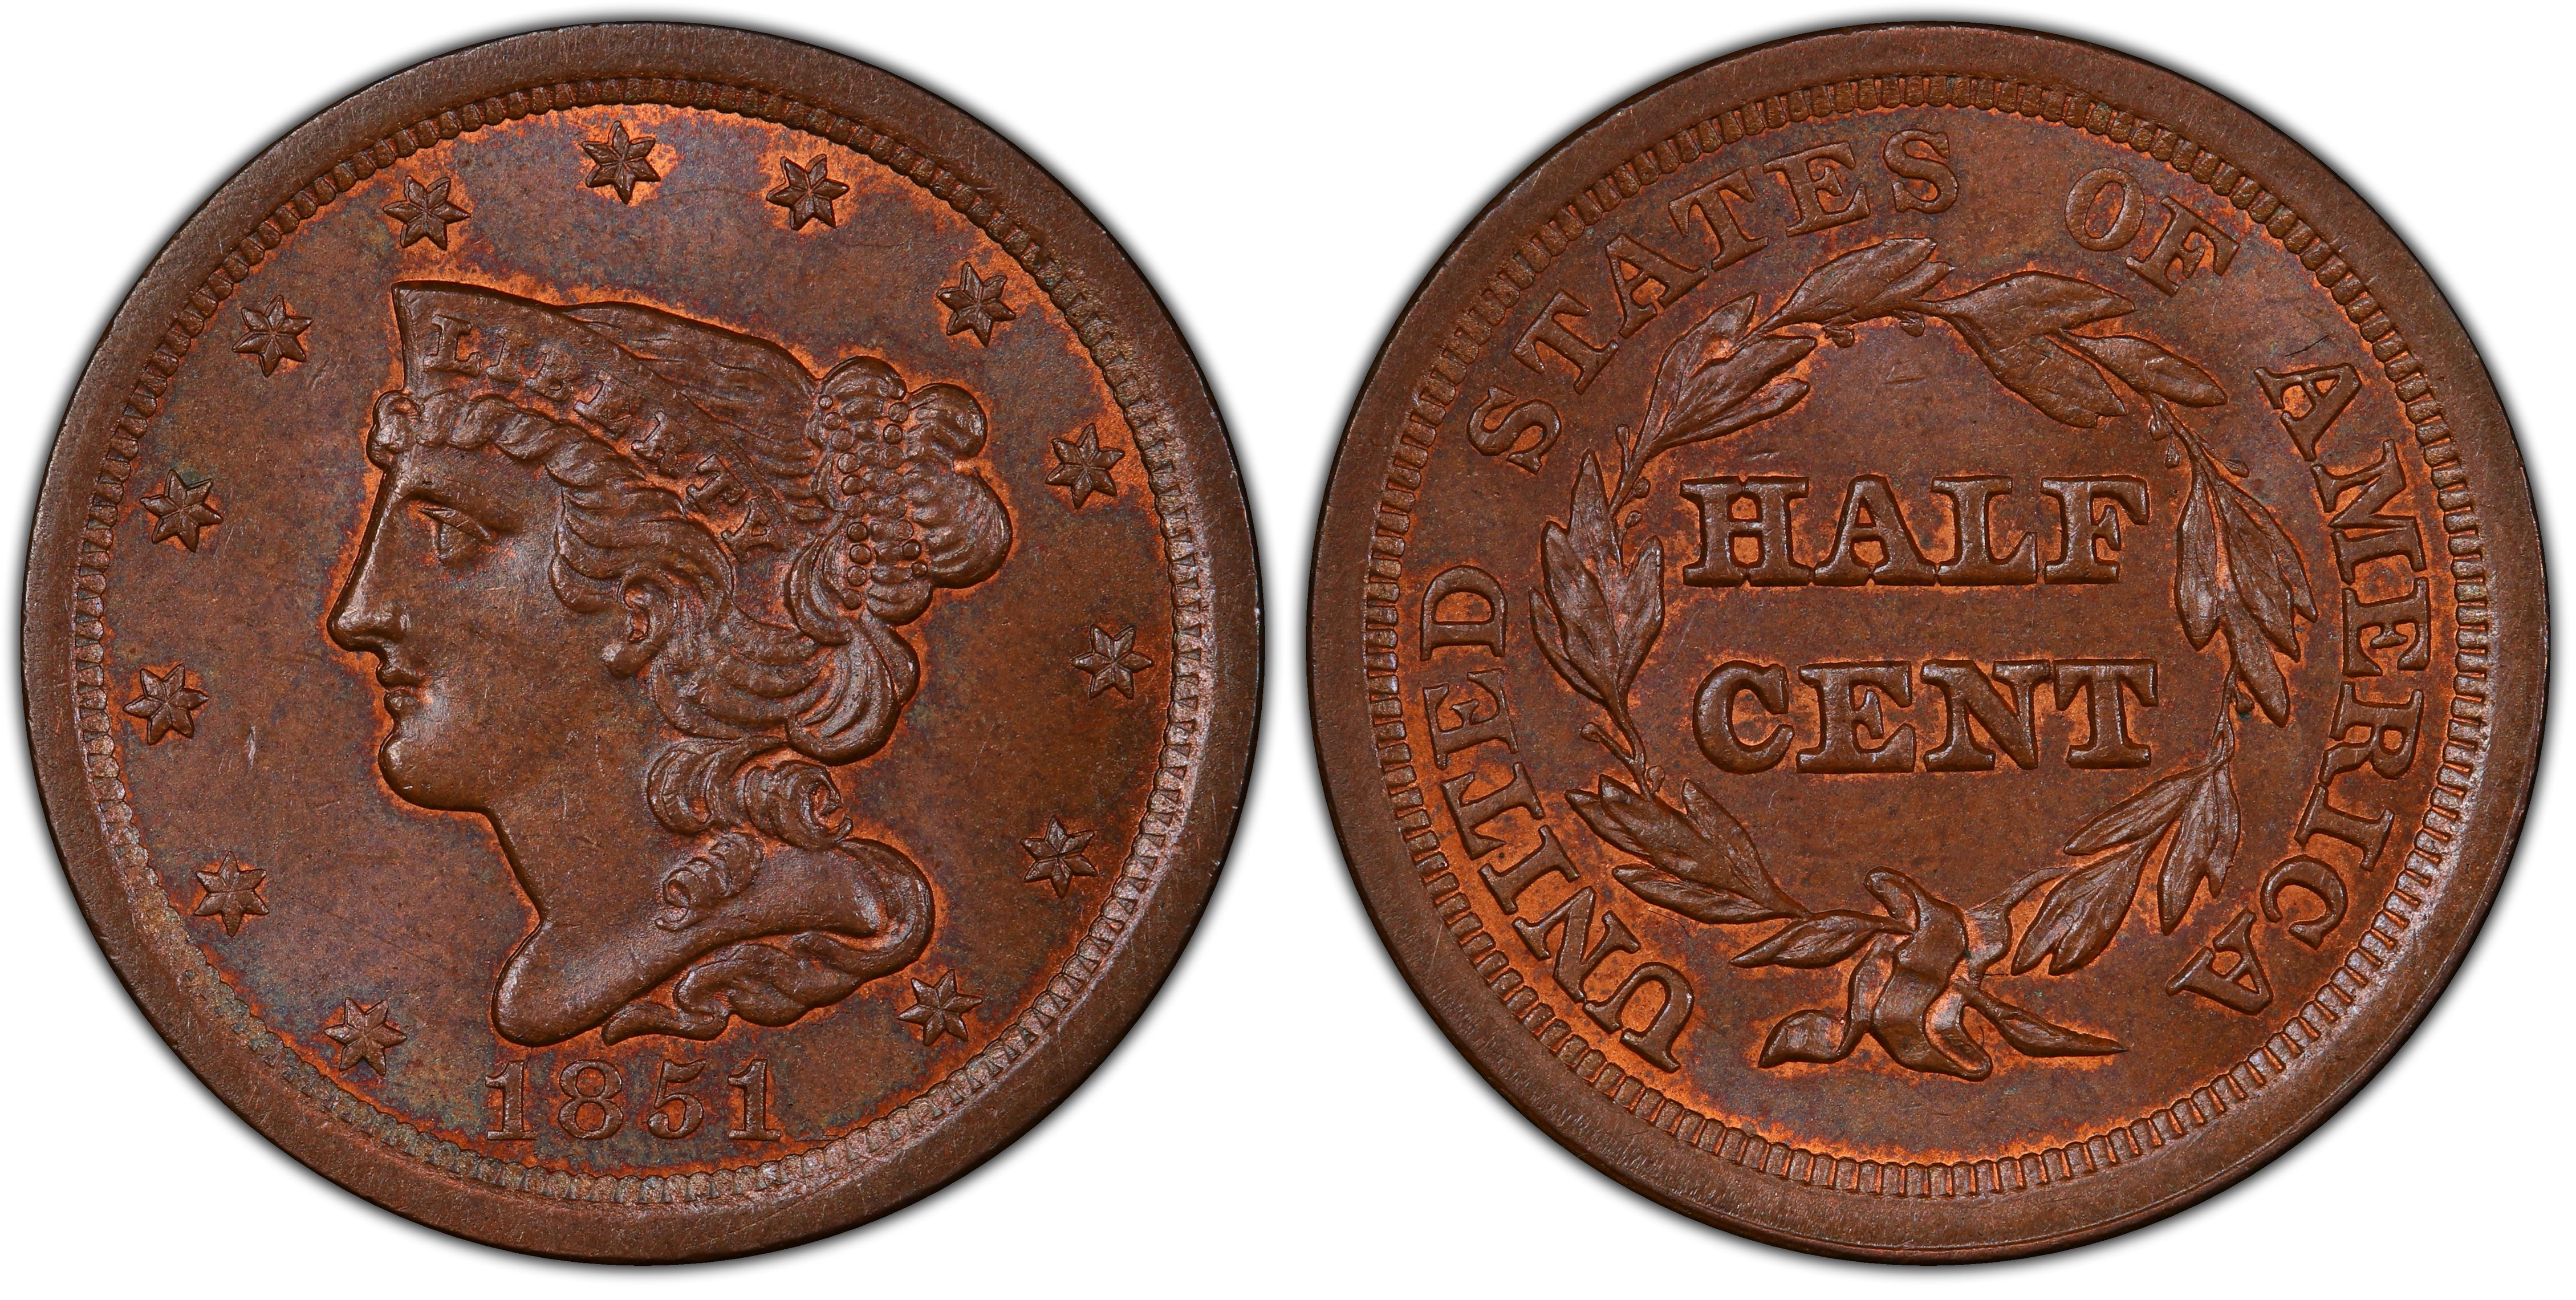 1851 1/2C, BN (Regular Strike) Braided Hair Half Cent - PCGS CoinFacts